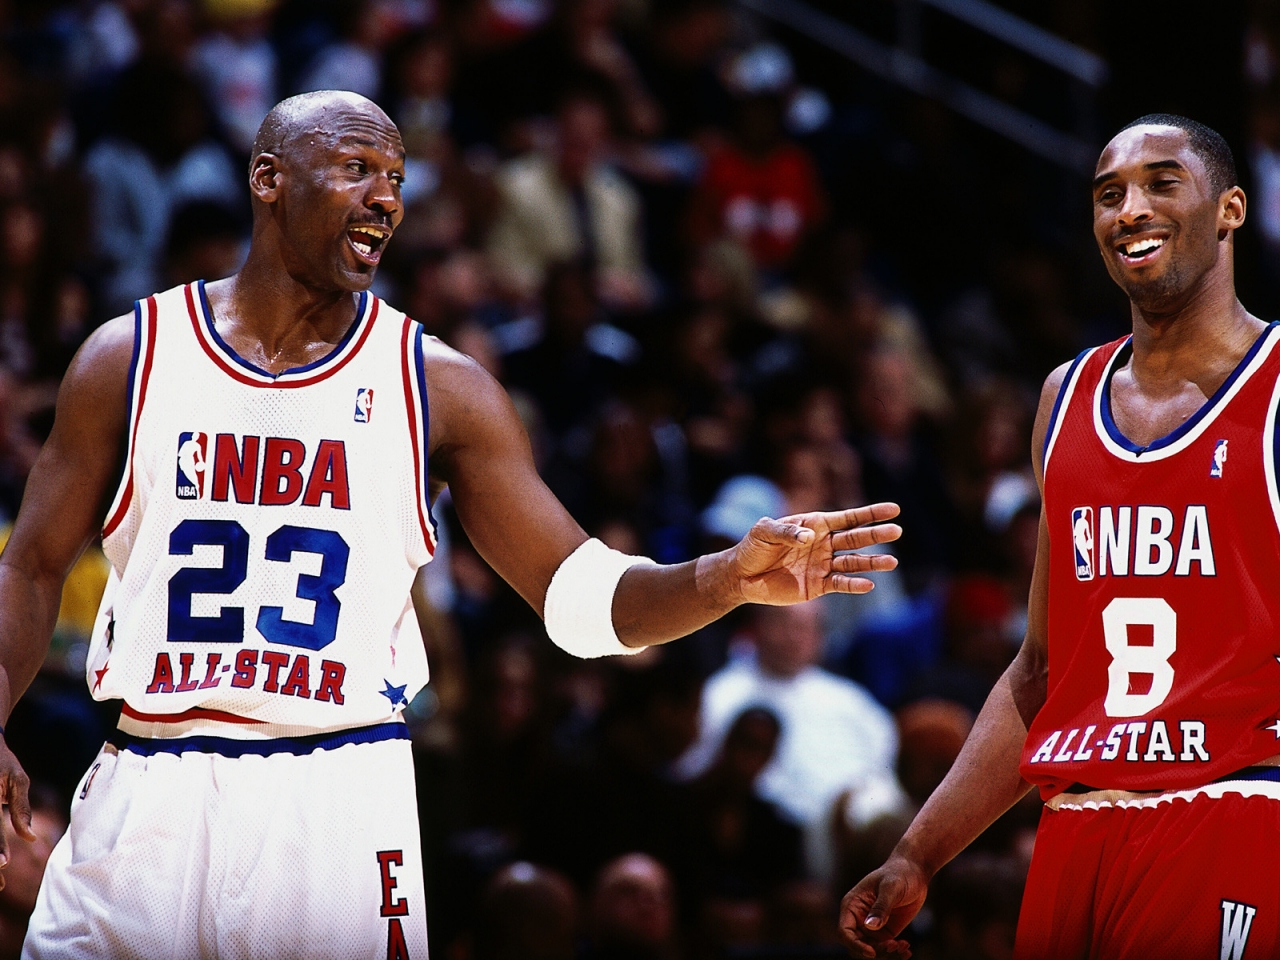 Kobe Bryant and Michael Jordan for 1280 x 960 resolution